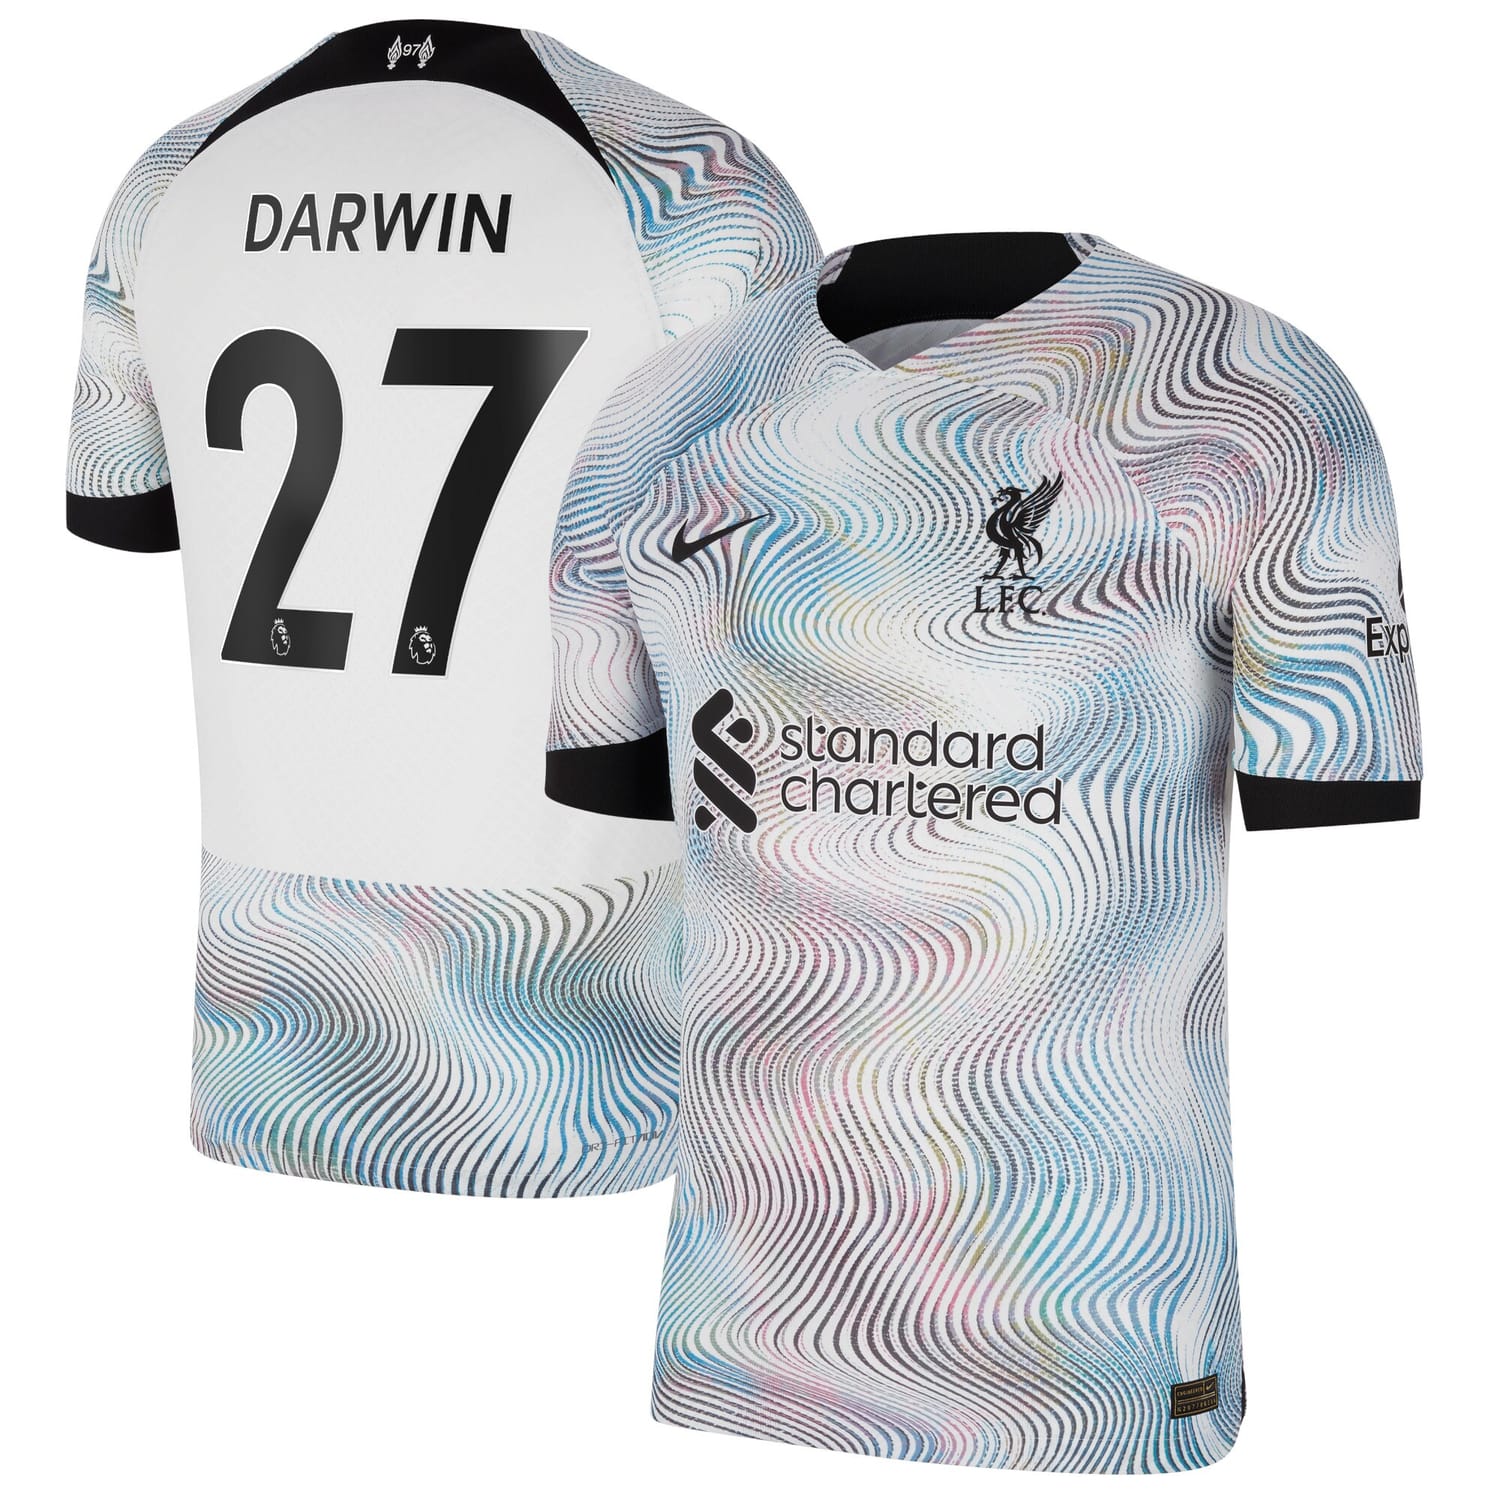 Premier League Liverpool Away Authentic Jersey Shirt 2022-23 player Darwin Núñez 27 printing for Men